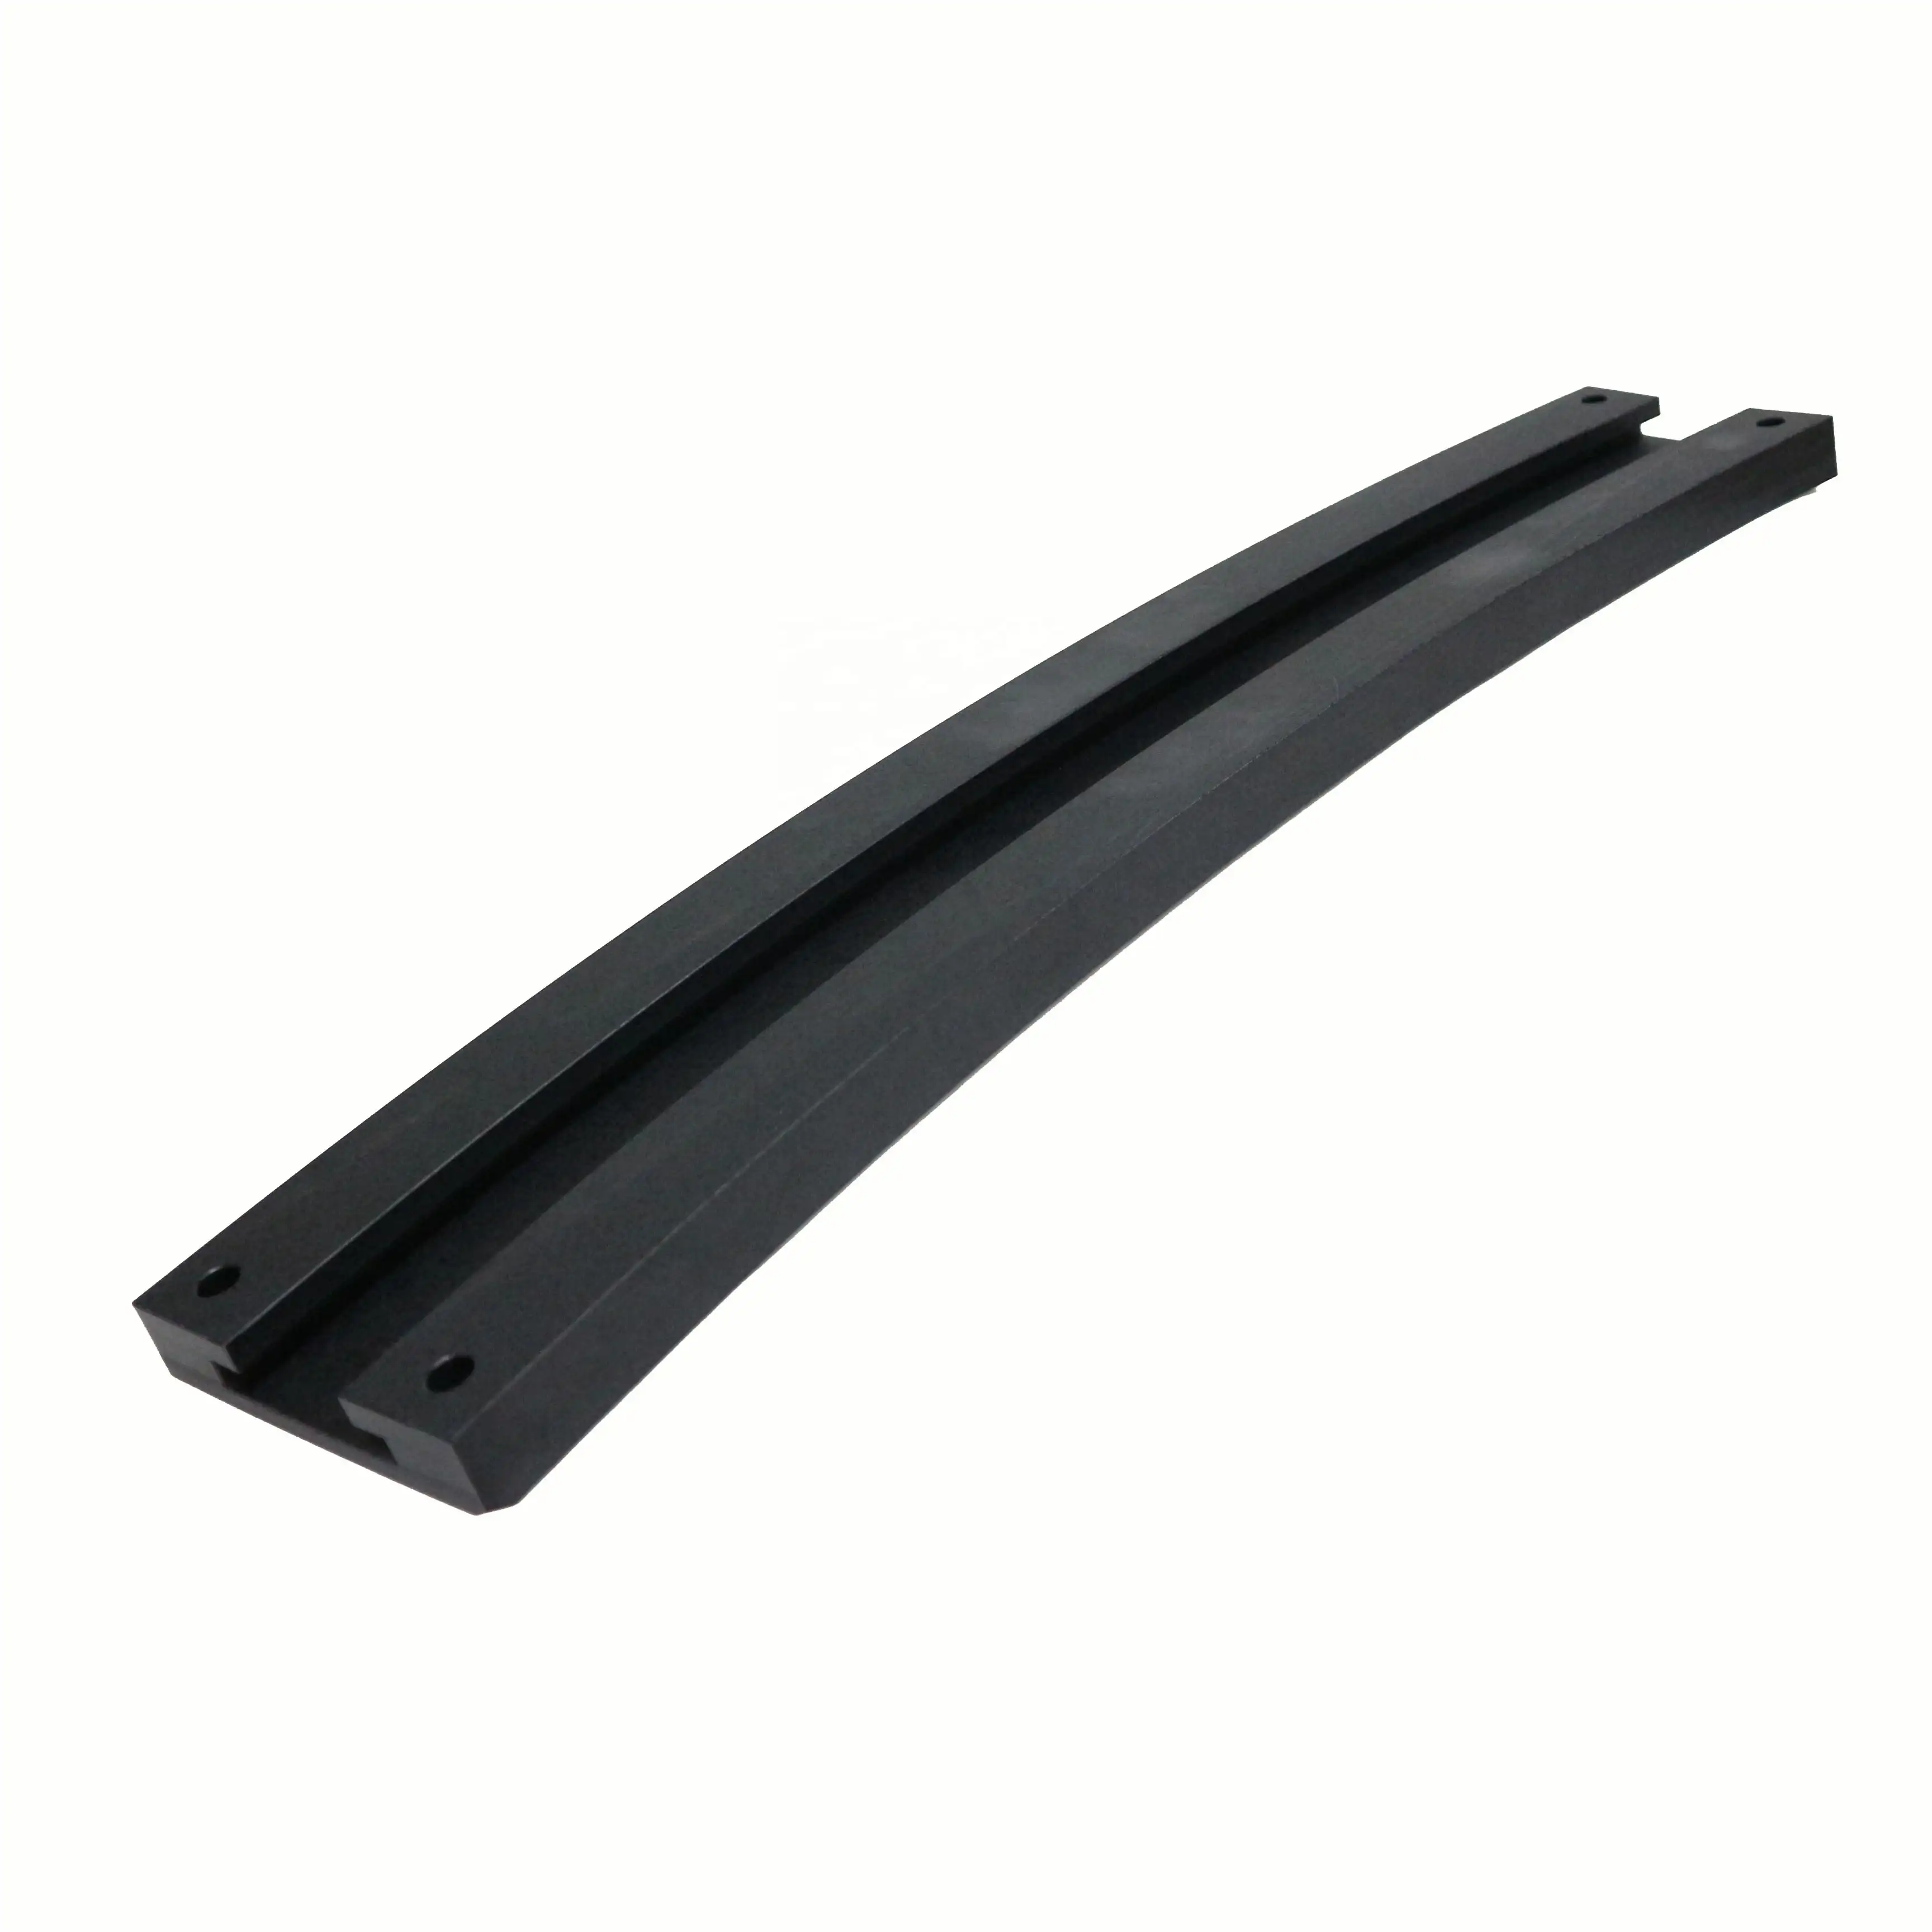 Wear resistant uhmwpe nylon plastic cnc t type curved linerar guide rail